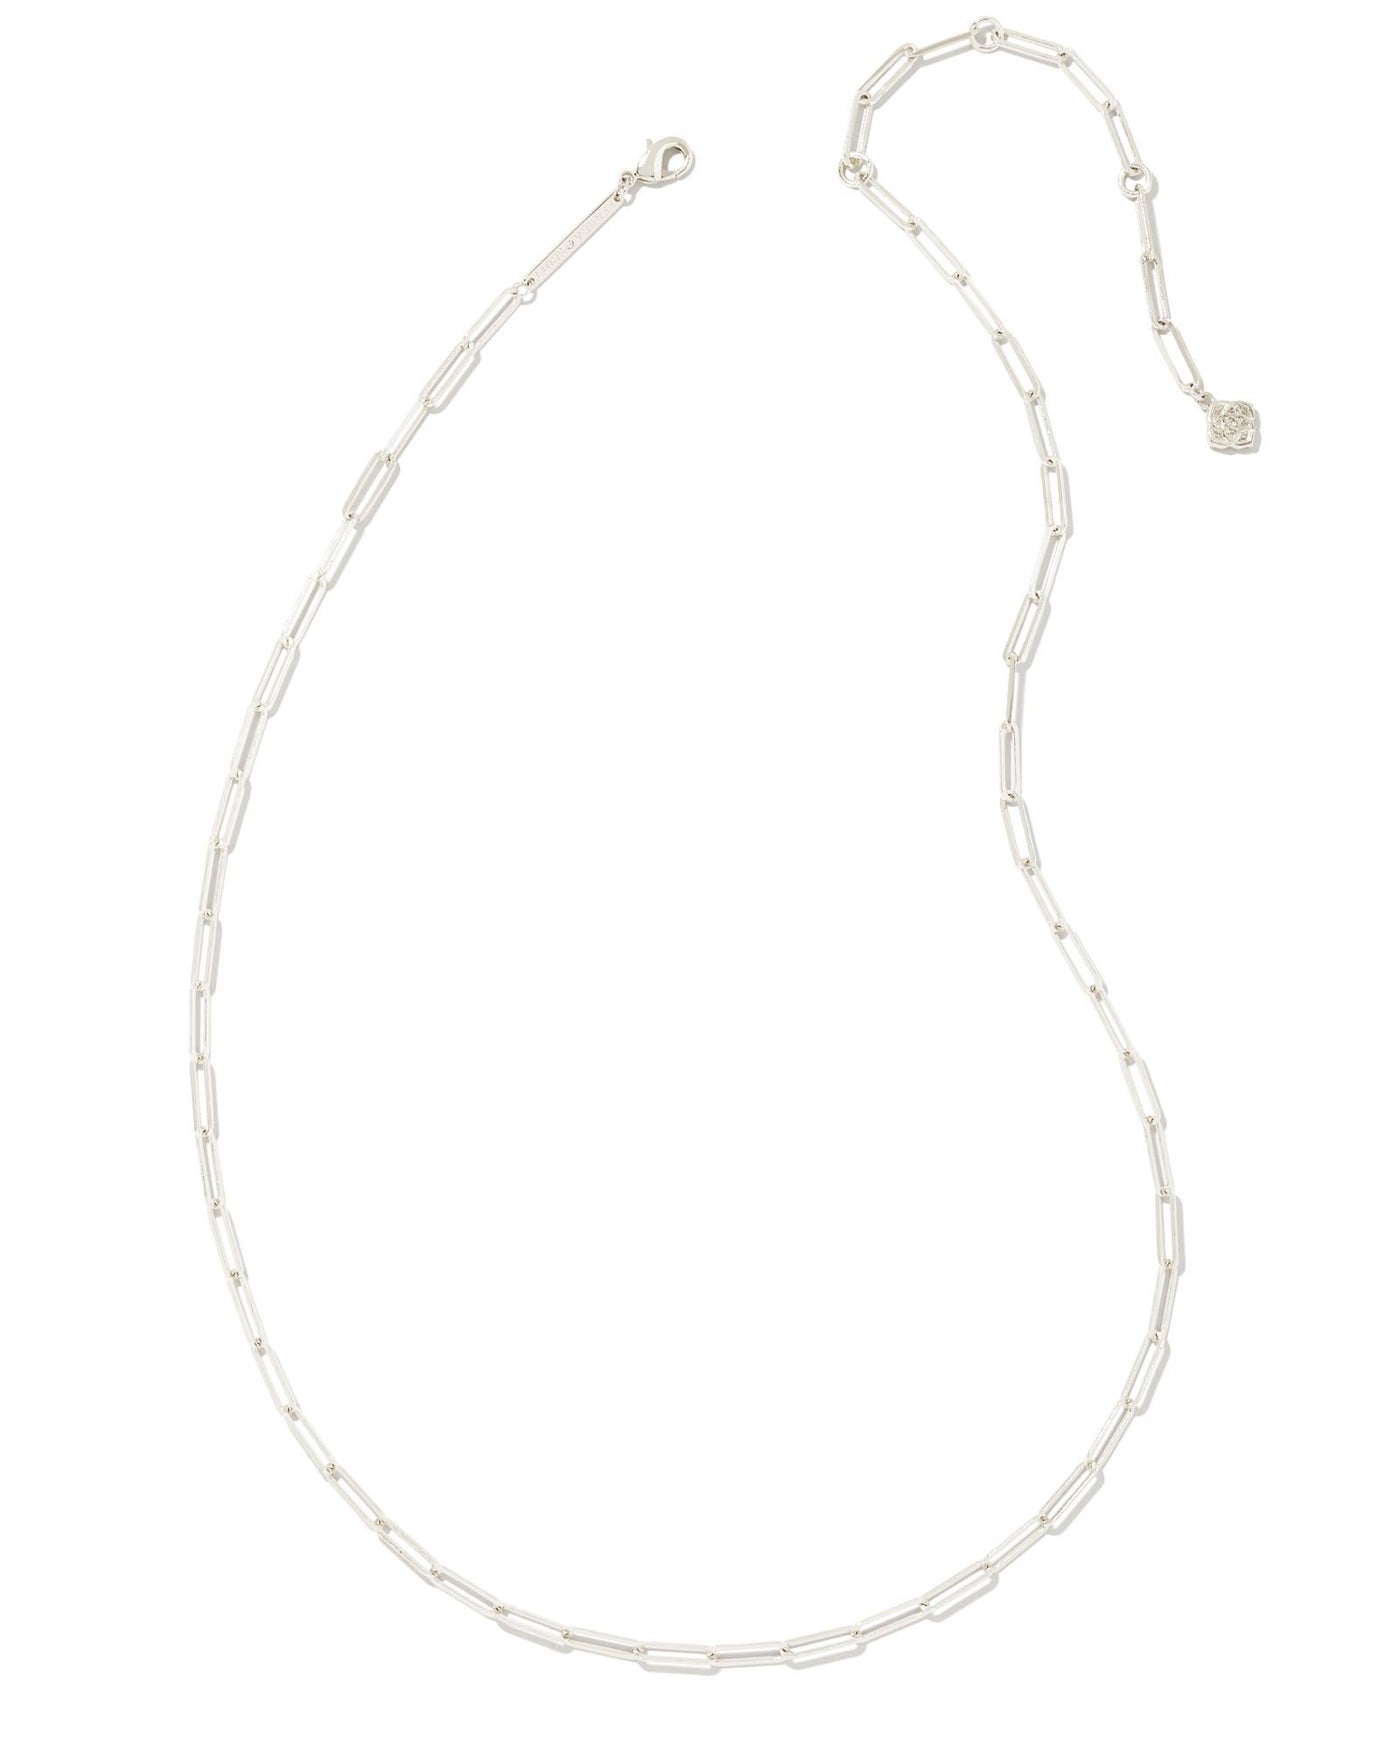 Kendra Scott Silver Courtney Paperclip Necklace on white background.